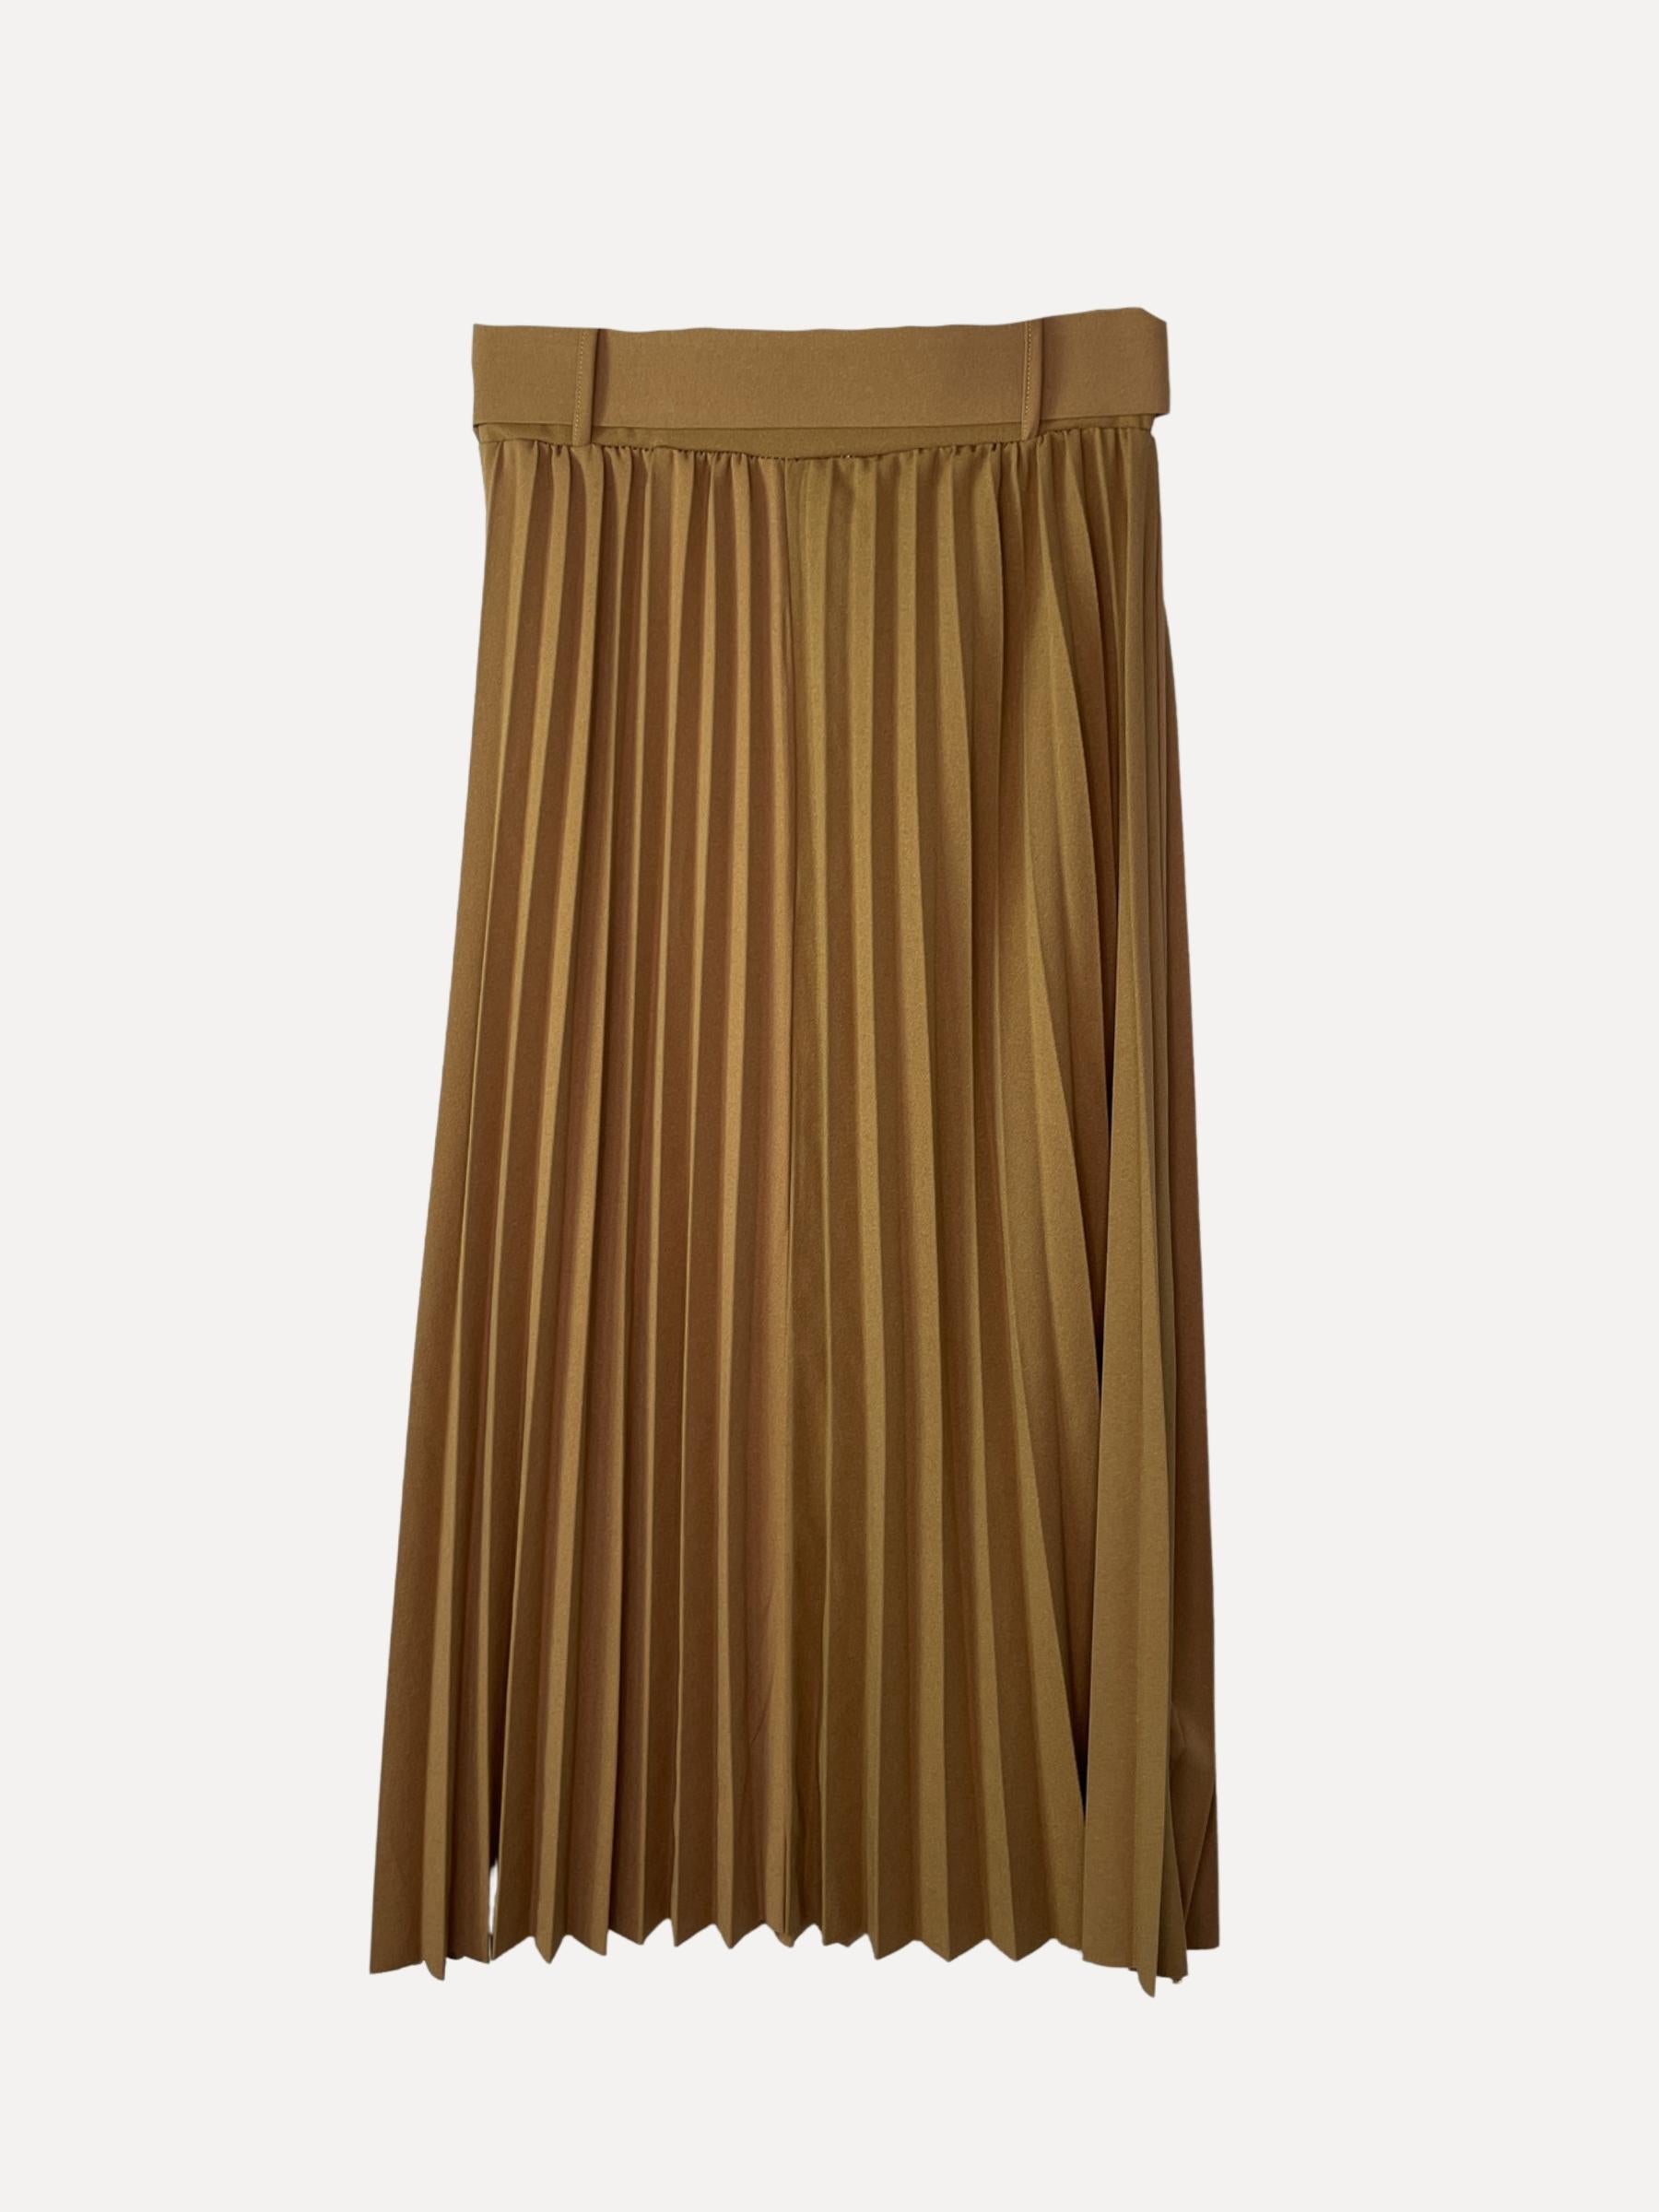 NEGRONI Skirt, Brown